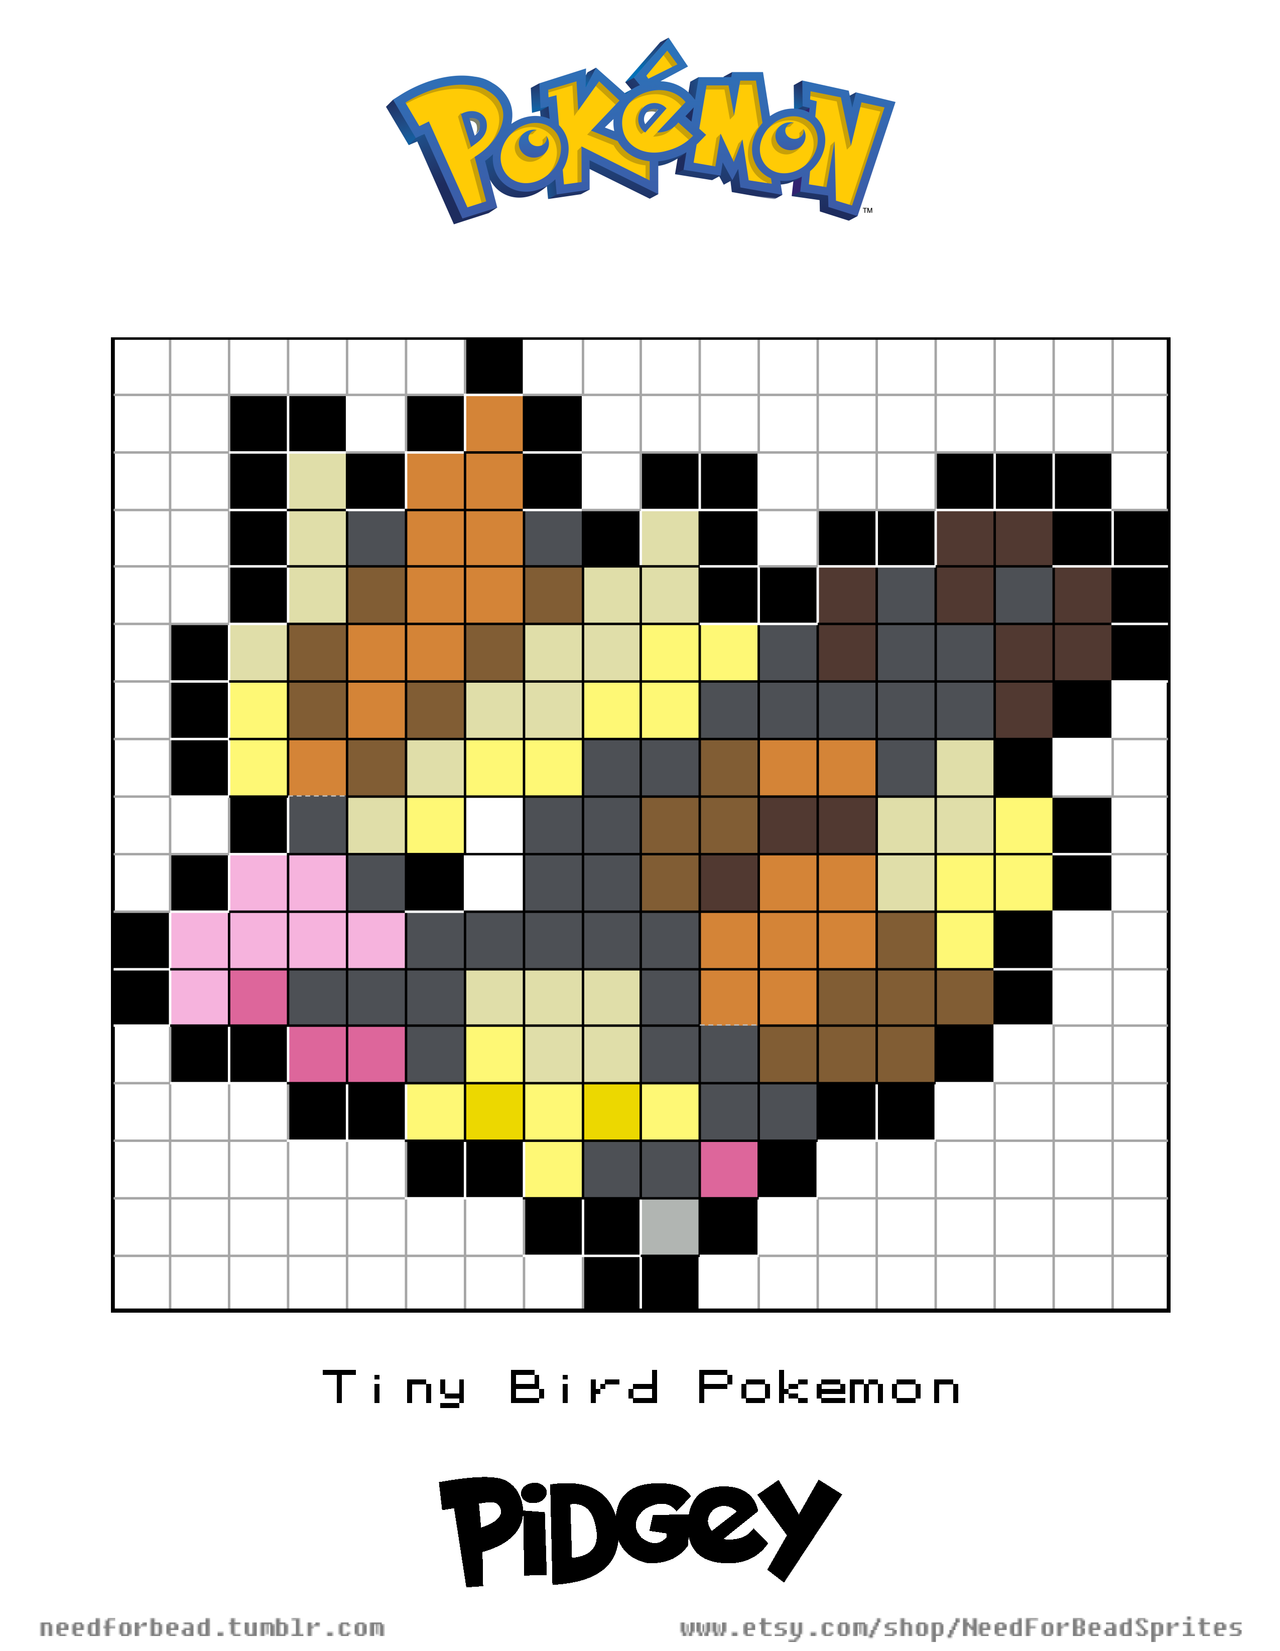 Pokemon: Pidgey #016 The Tiny Bird Pokemon... - Need for Bead